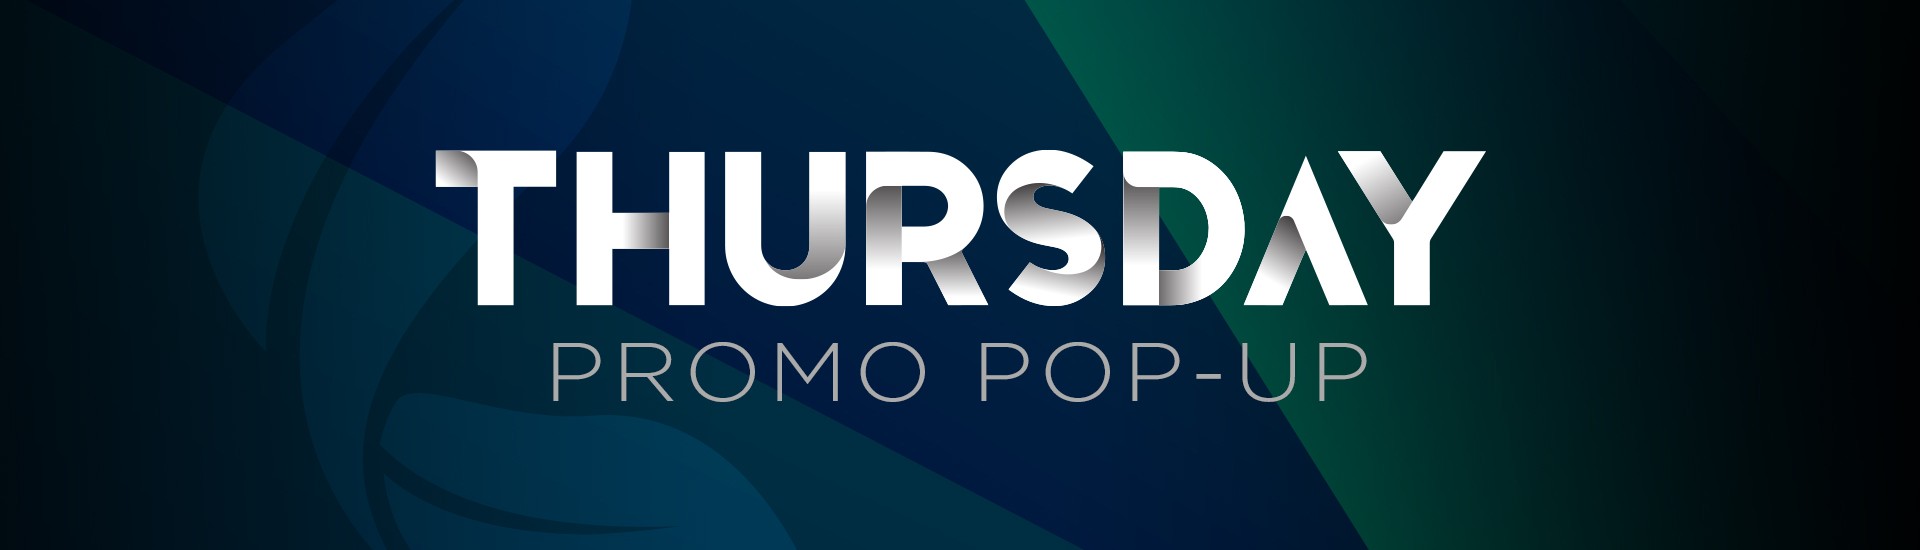 Thursday Promo Pop-Up